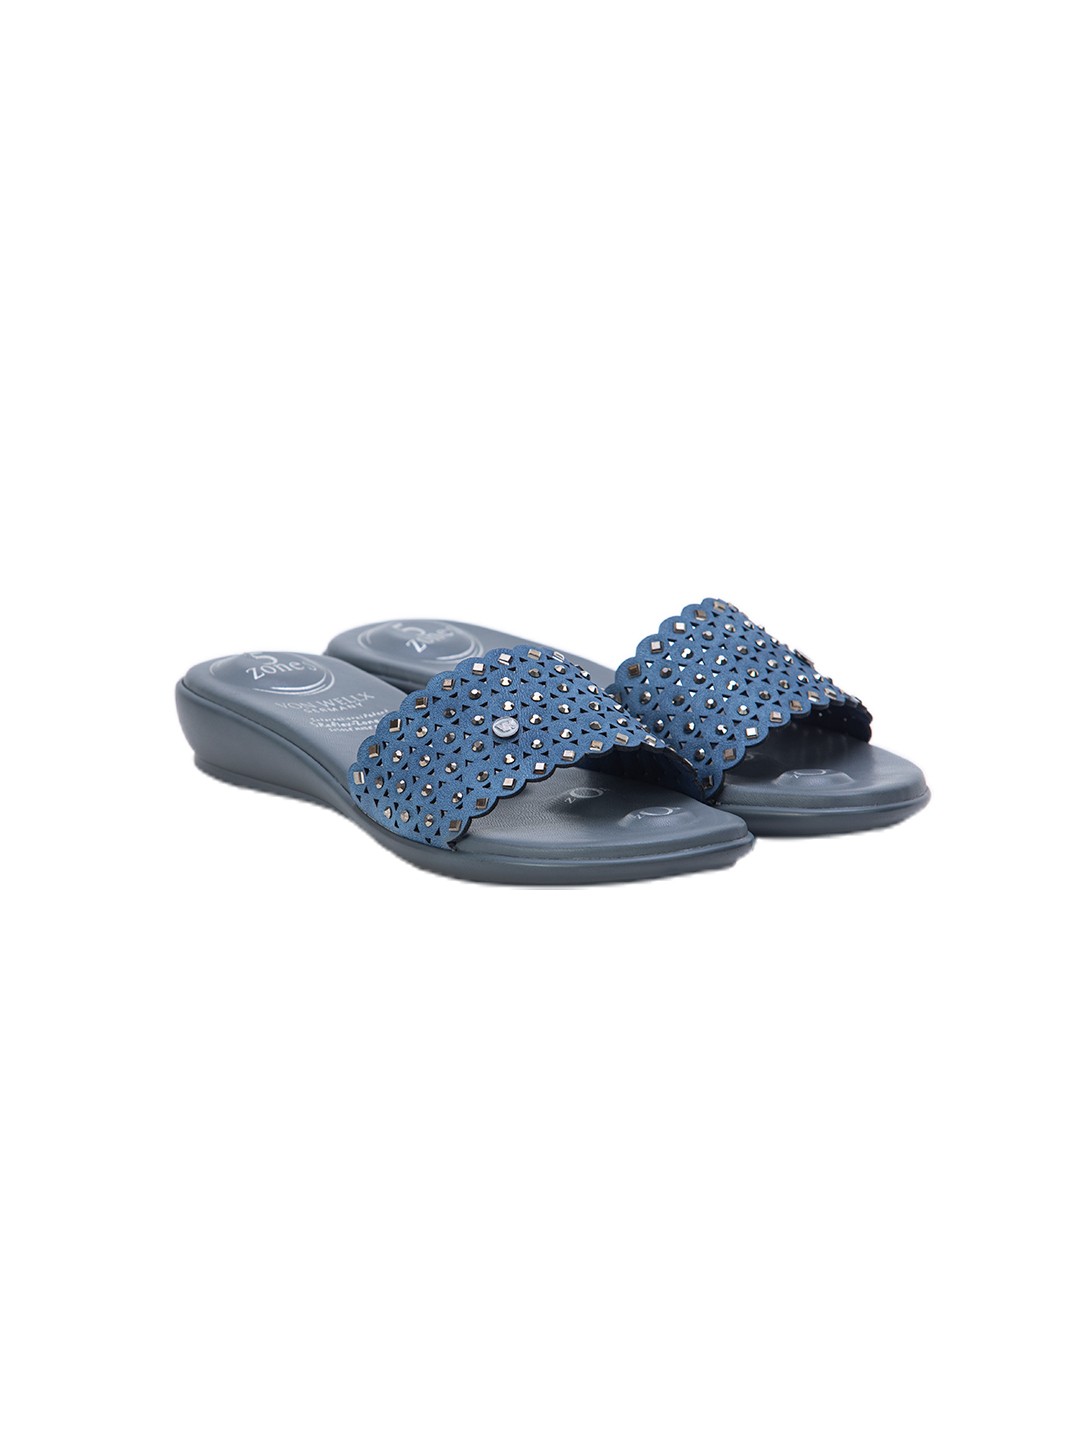 Buy Von Wellx Germany Comfort Vivre Blue Slippers Online in Rajasthan